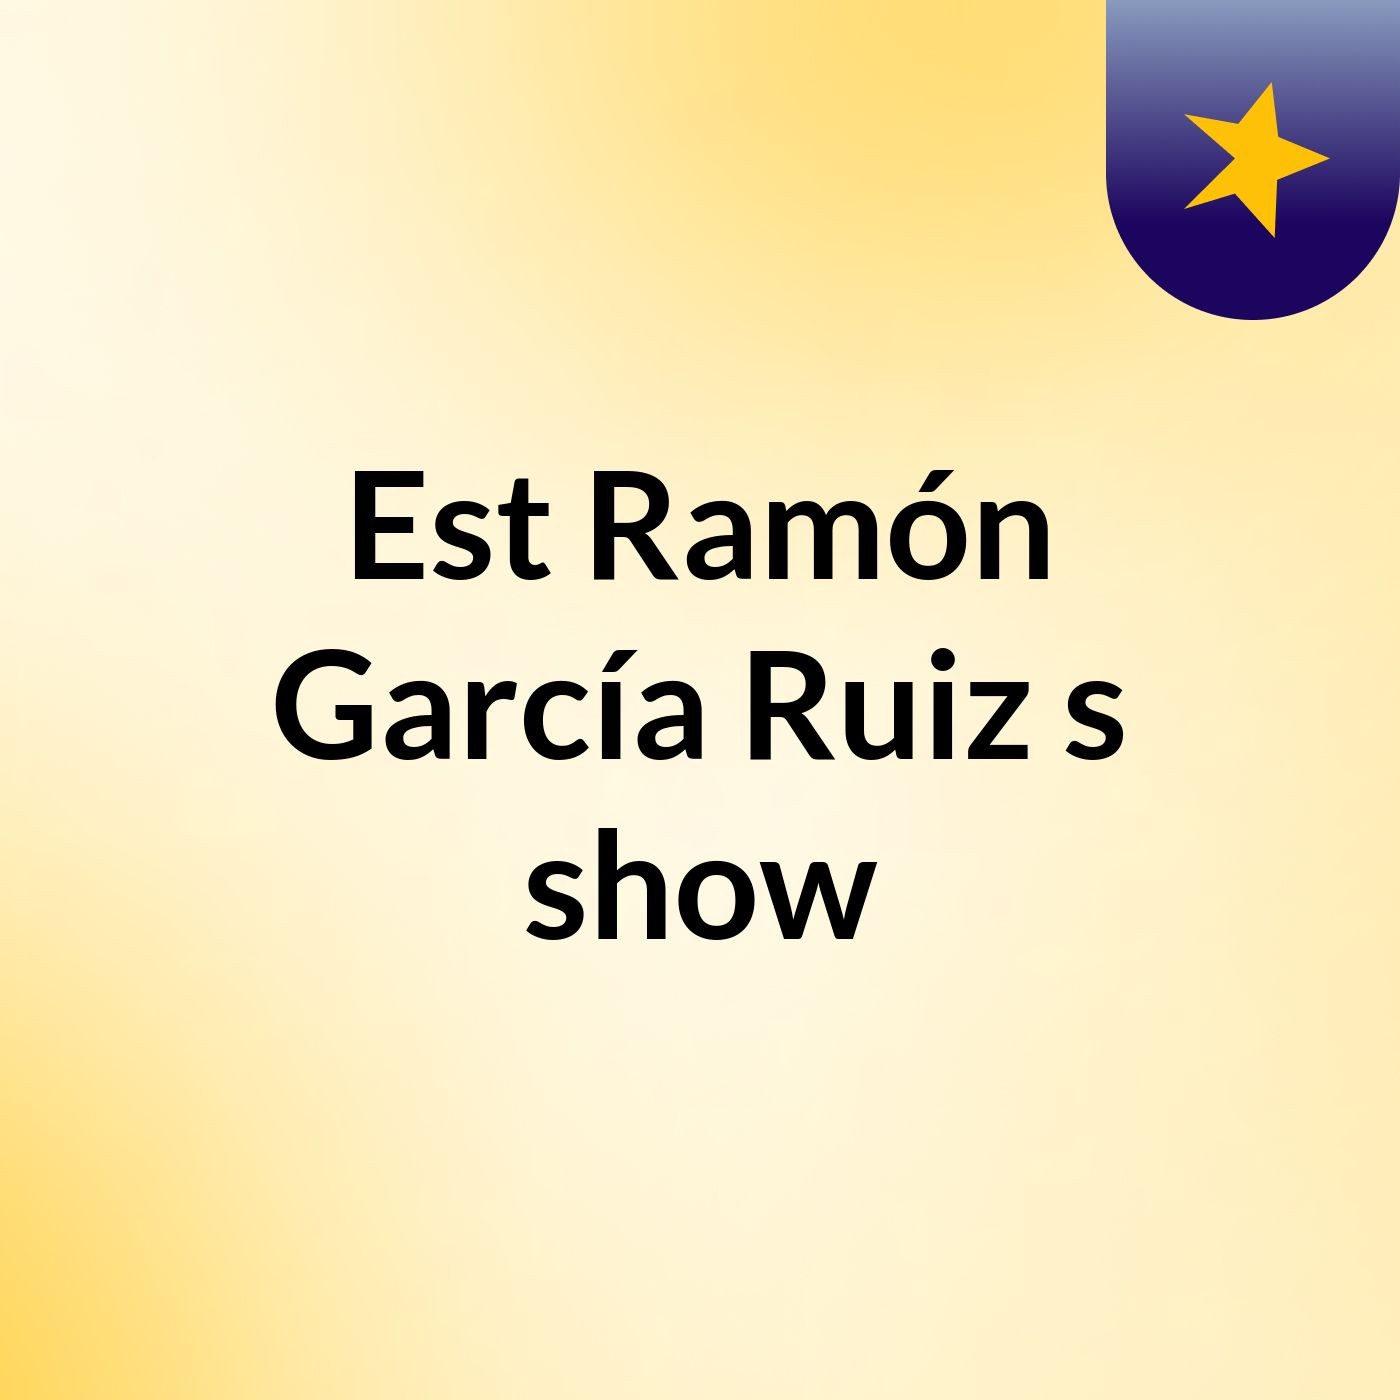 Est Ramón García Ruiz's show